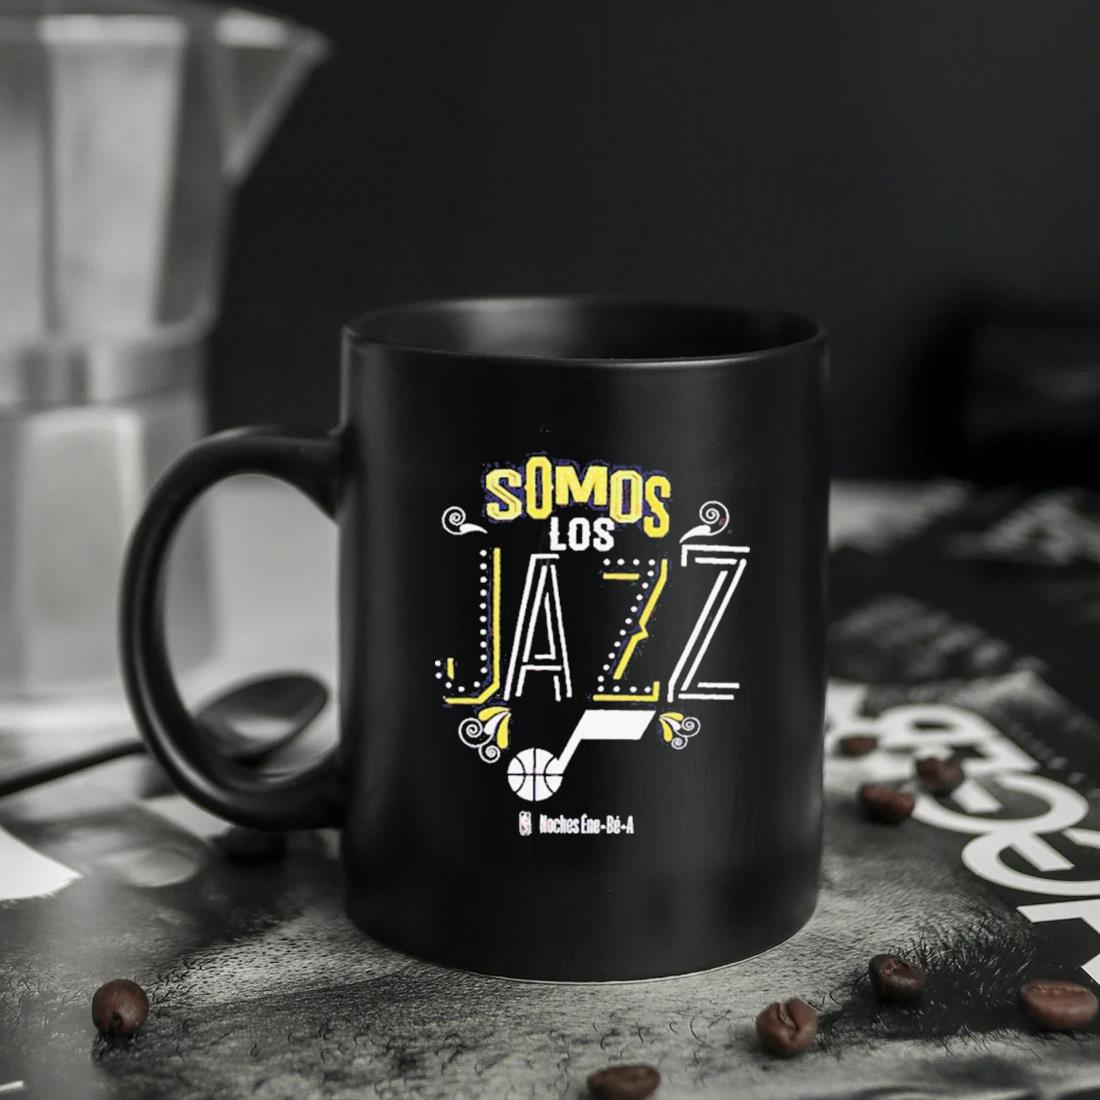 Somos Los Utah Jazz Noches Ene-be-a Mug ten